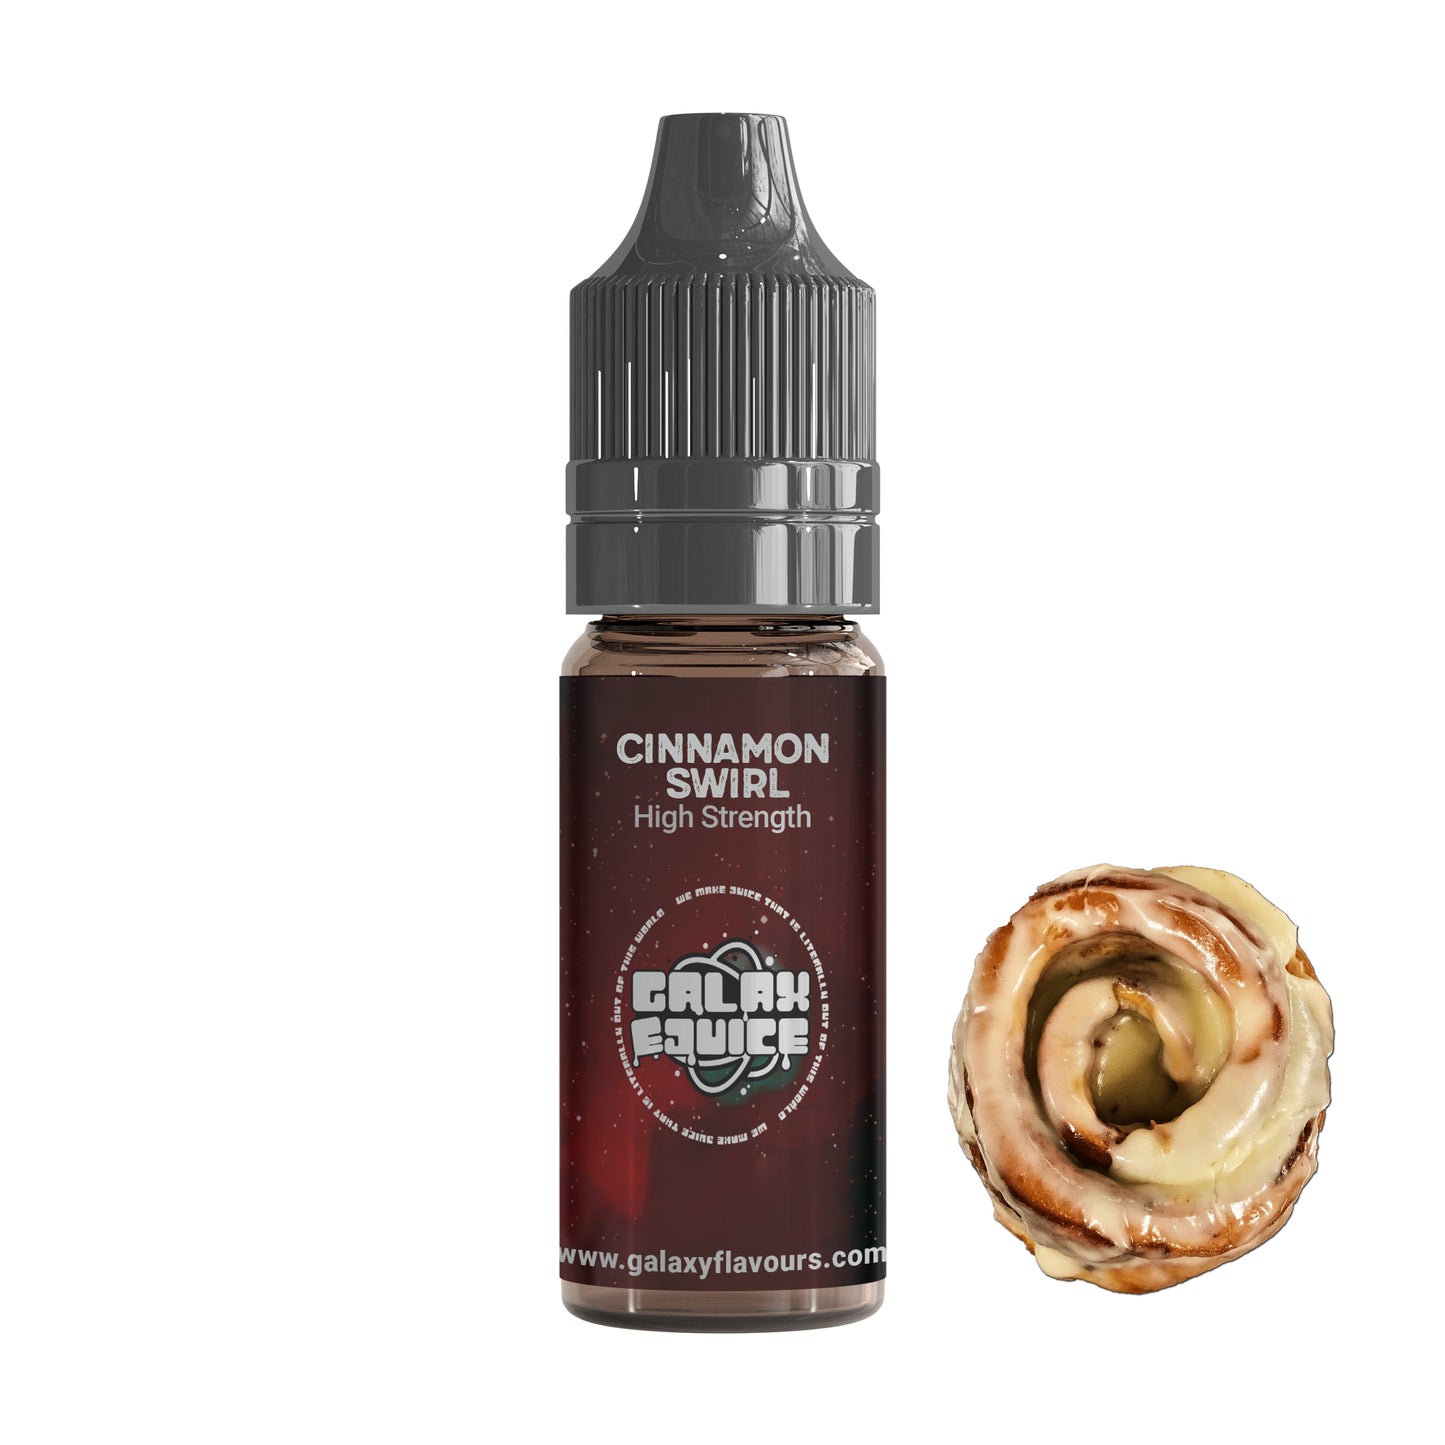 Cinnamon Danish Swirl High Strength Professional Flavouring.